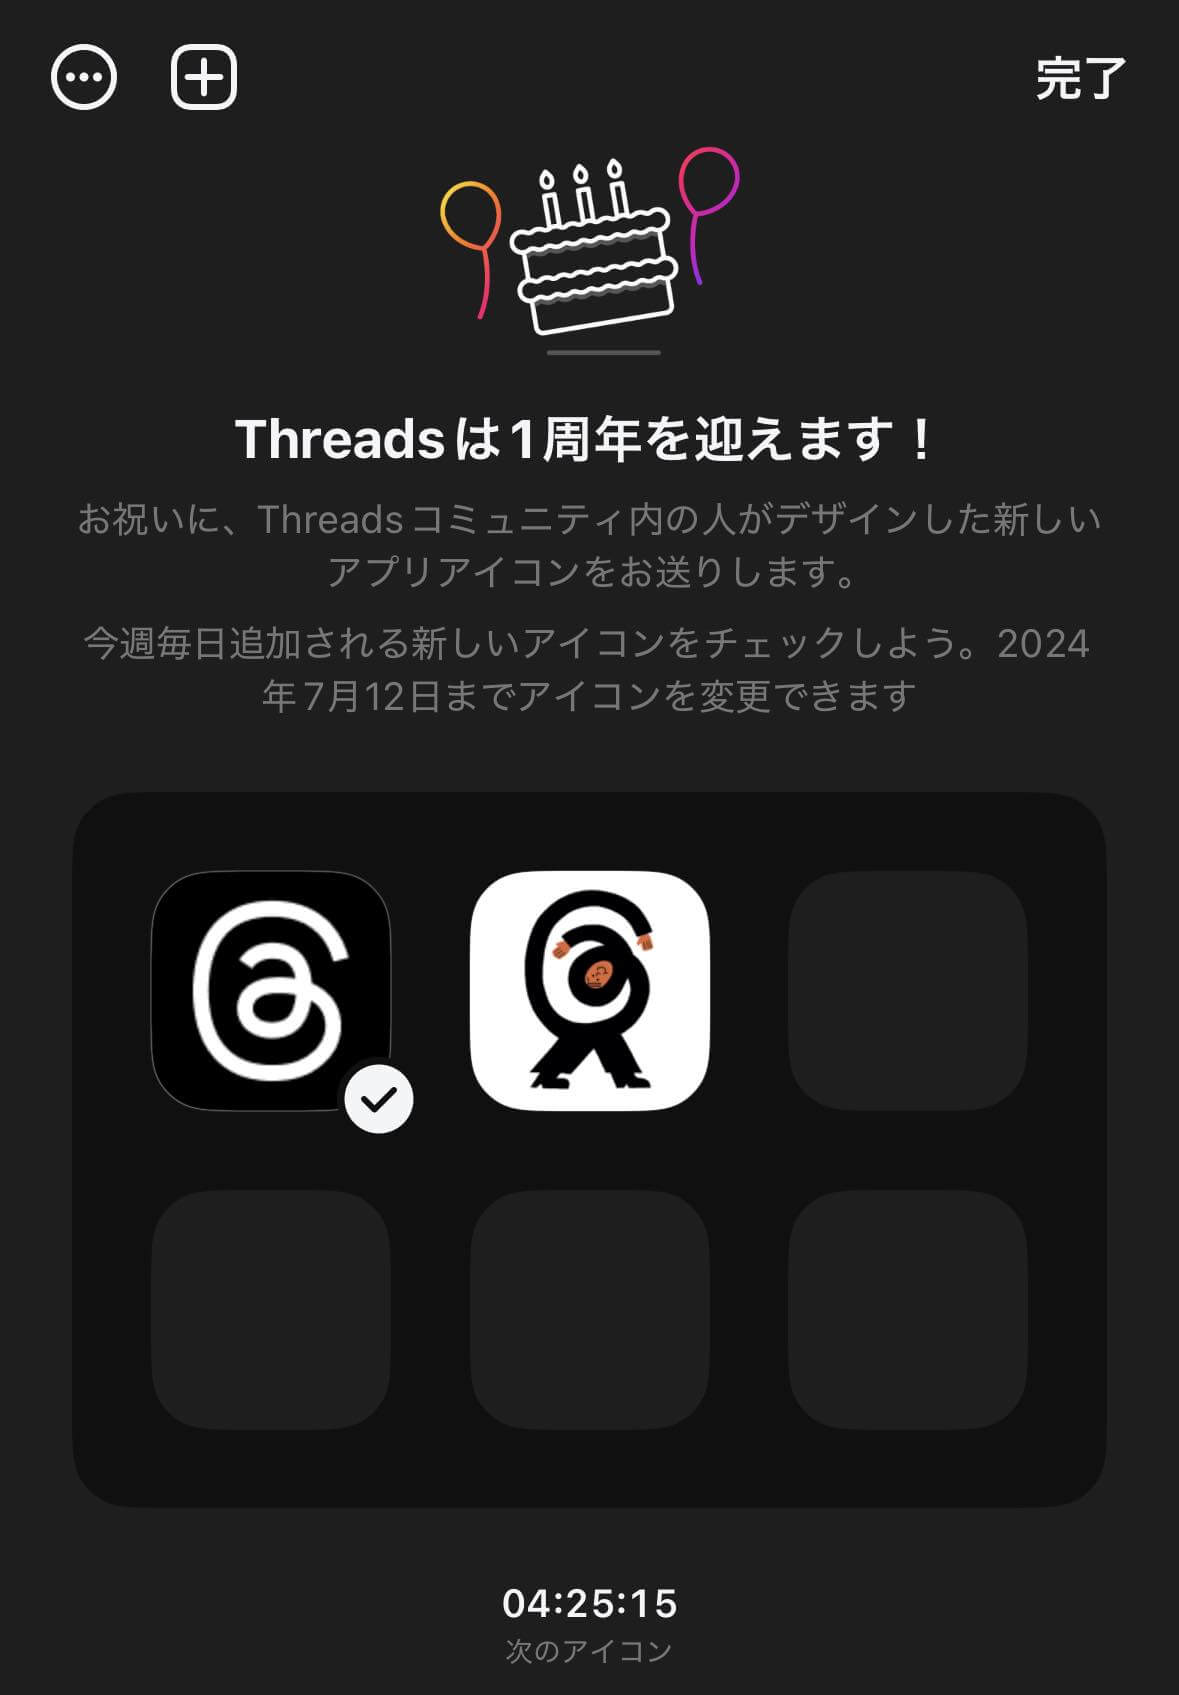 Threads、1周年記念でアプリアイコンを特別なデザインに変更出来るキャンペーンを開催中